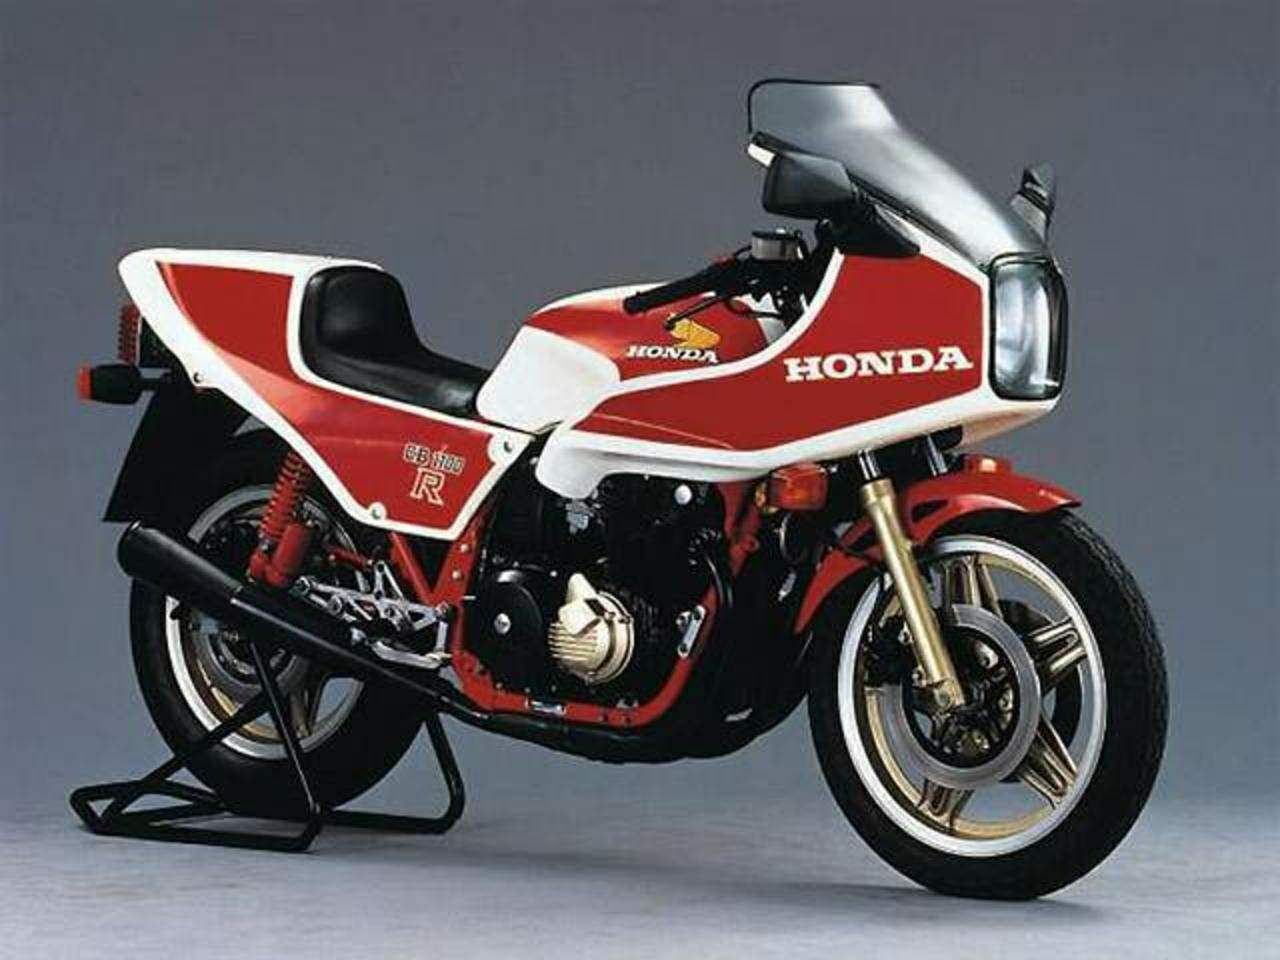 Honda CB1100R studio shot